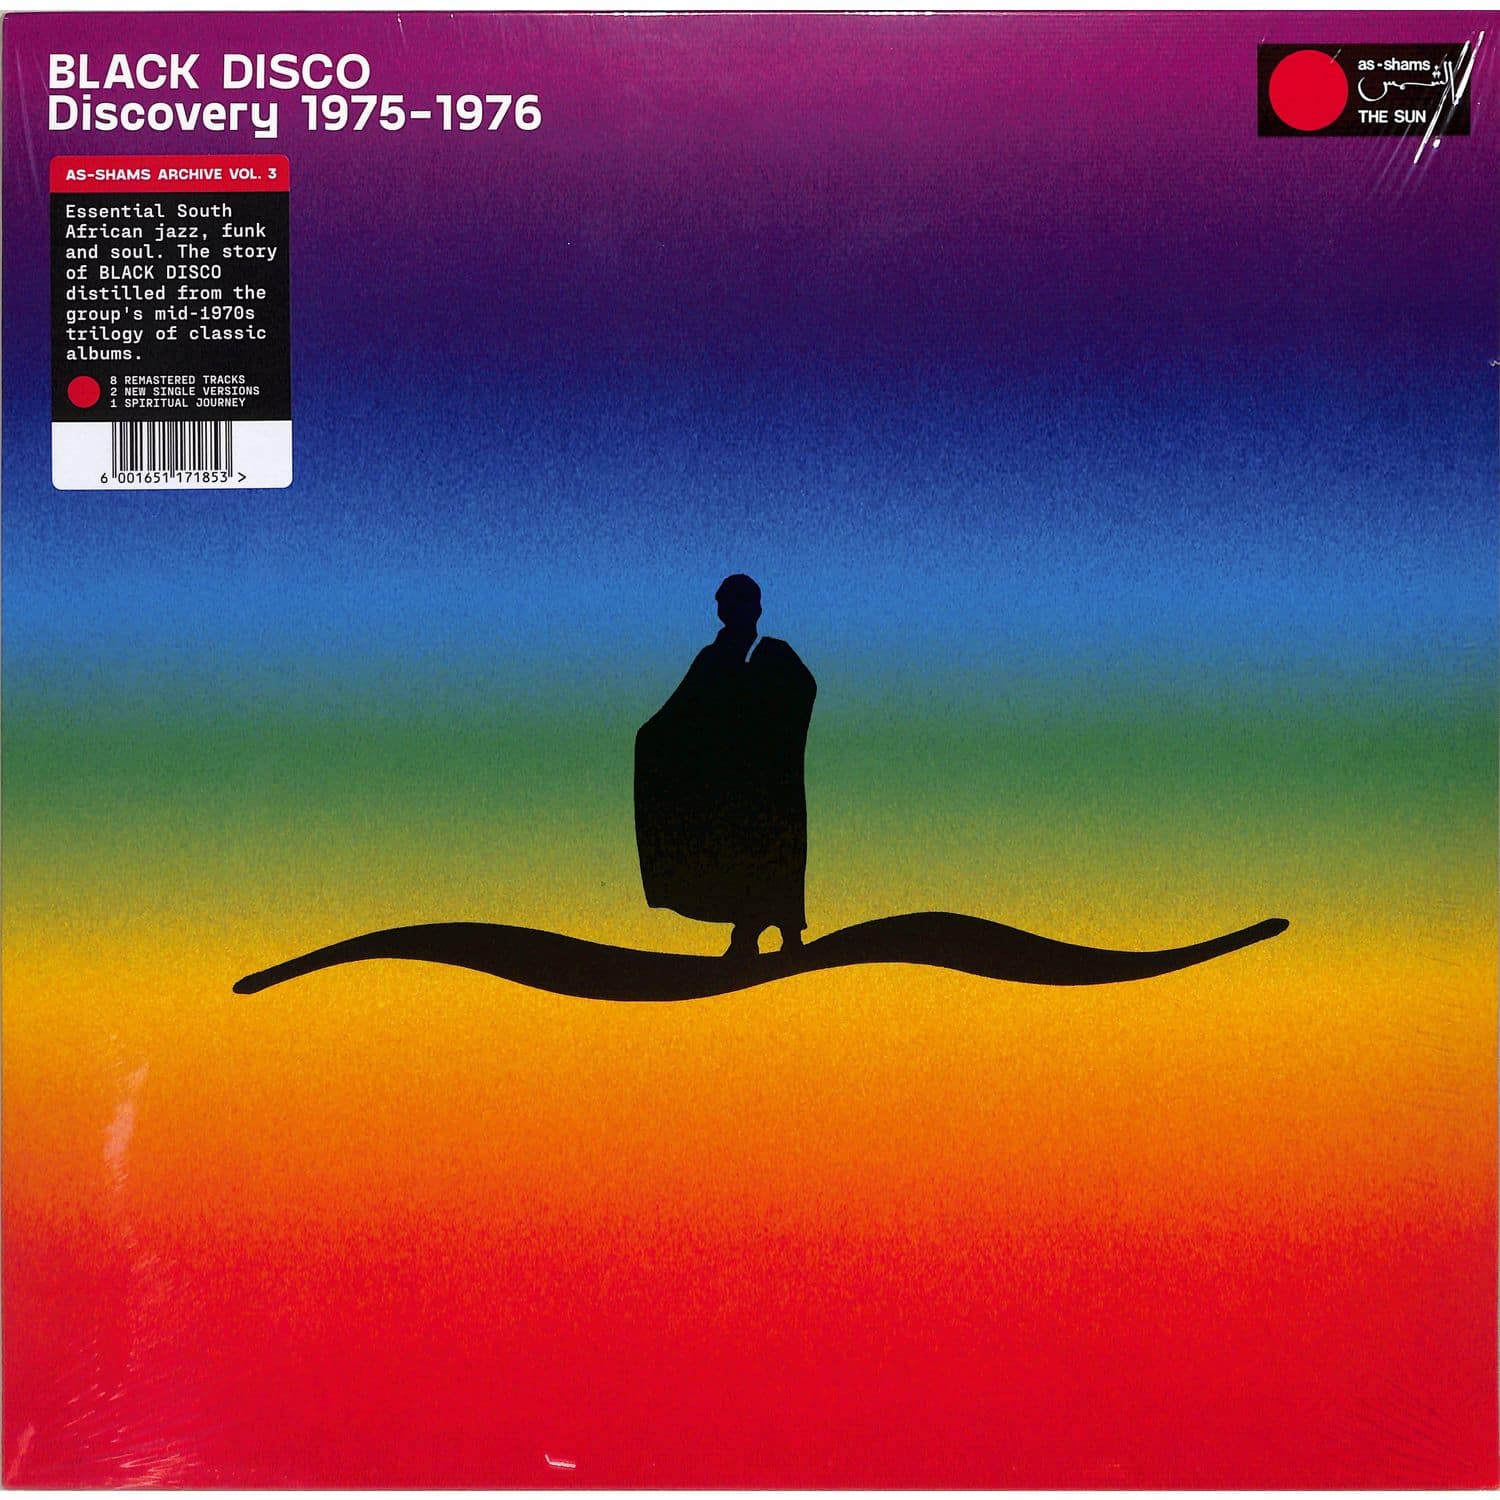 Black Disco - DISCOVERY 1975-1976 